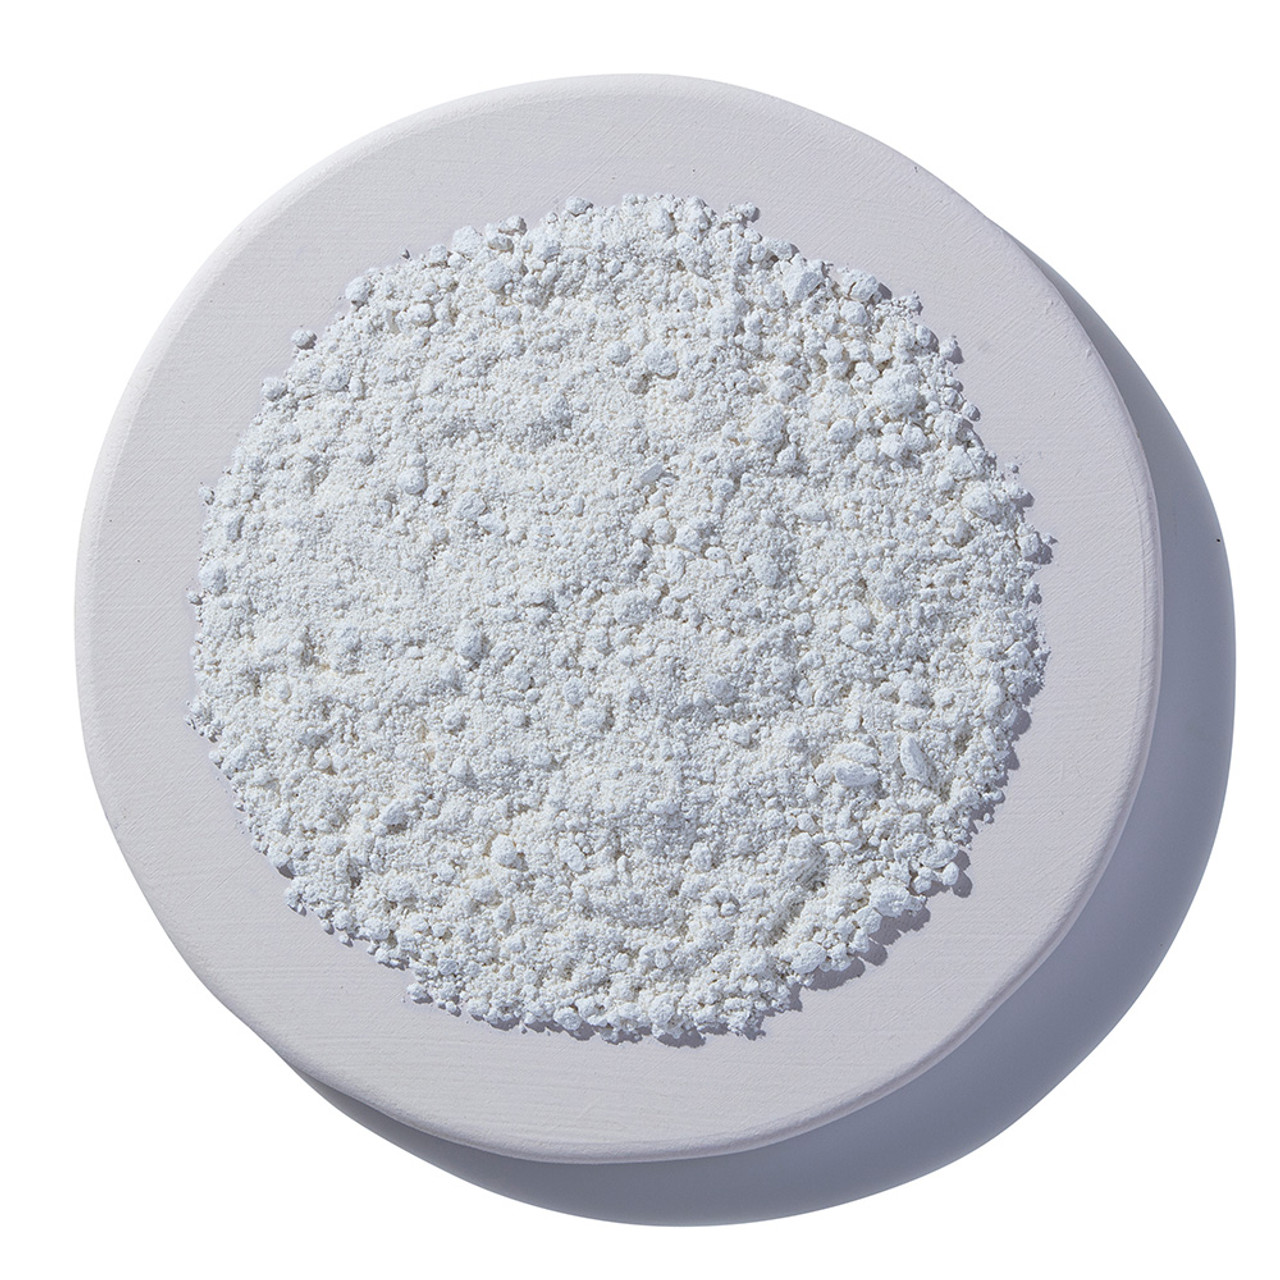 White Kaolin Clay - 2 lb 